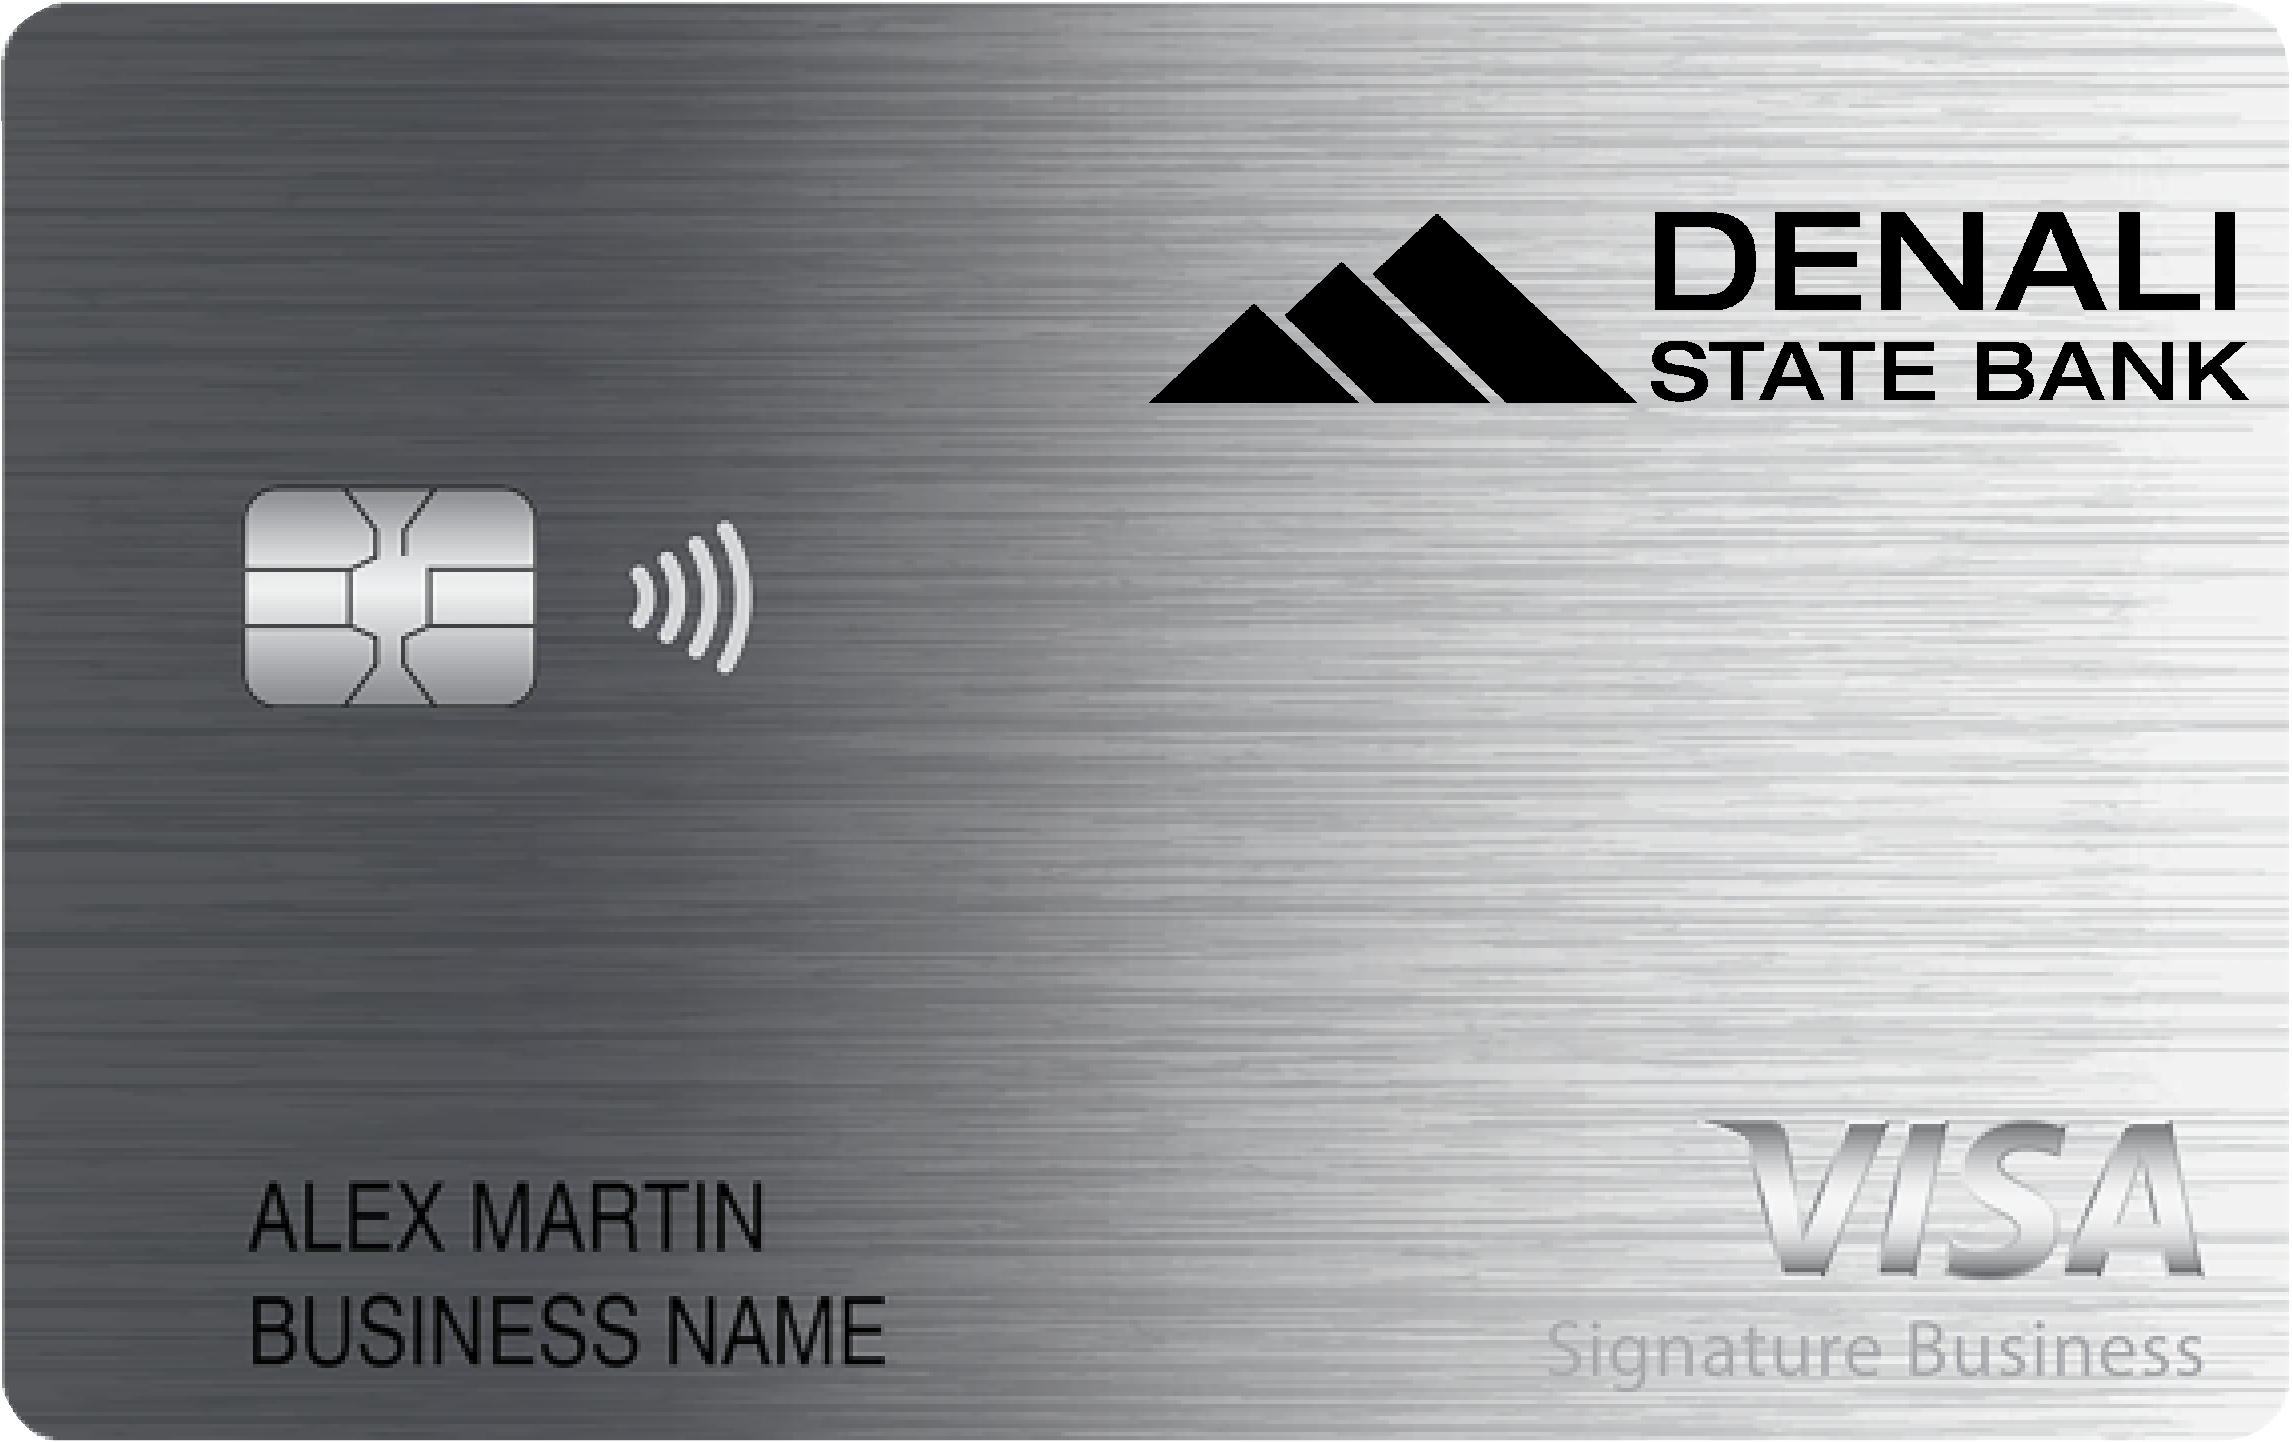 Denali State Bank Smart Business Rewards Card